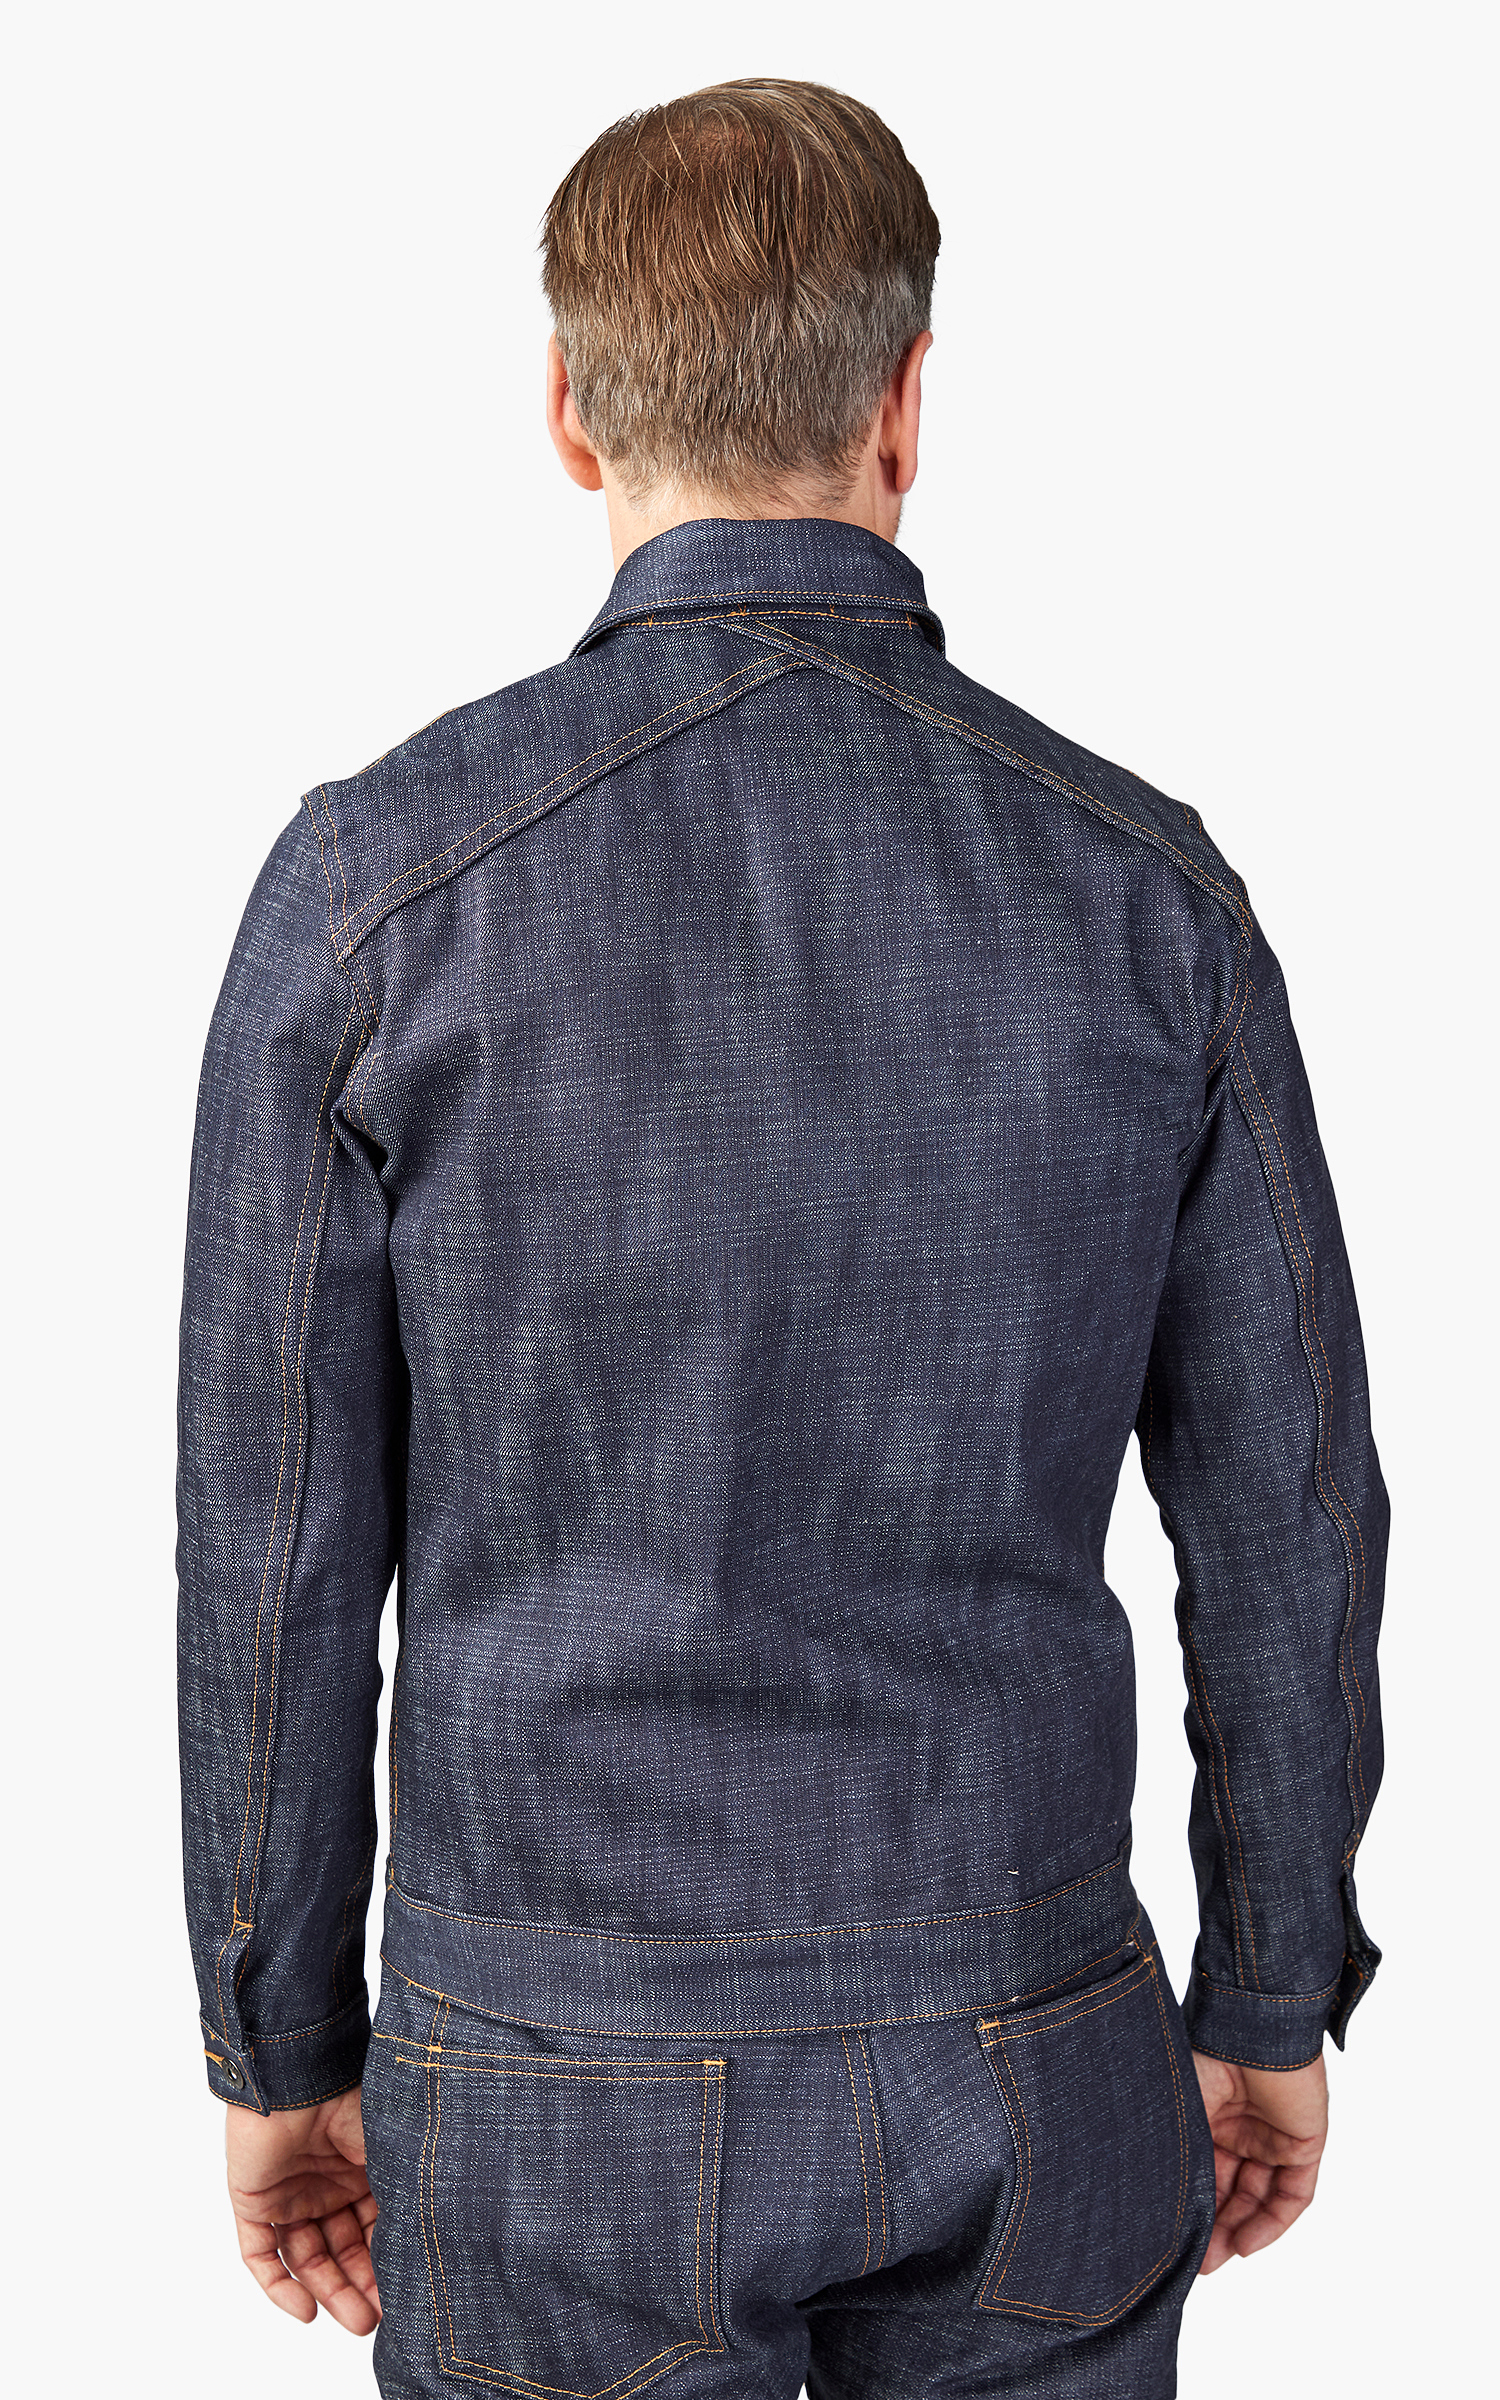 3sixteen - DJ-102xn - Natural Indigo Type 3s Denim Jacket – Withered Fig